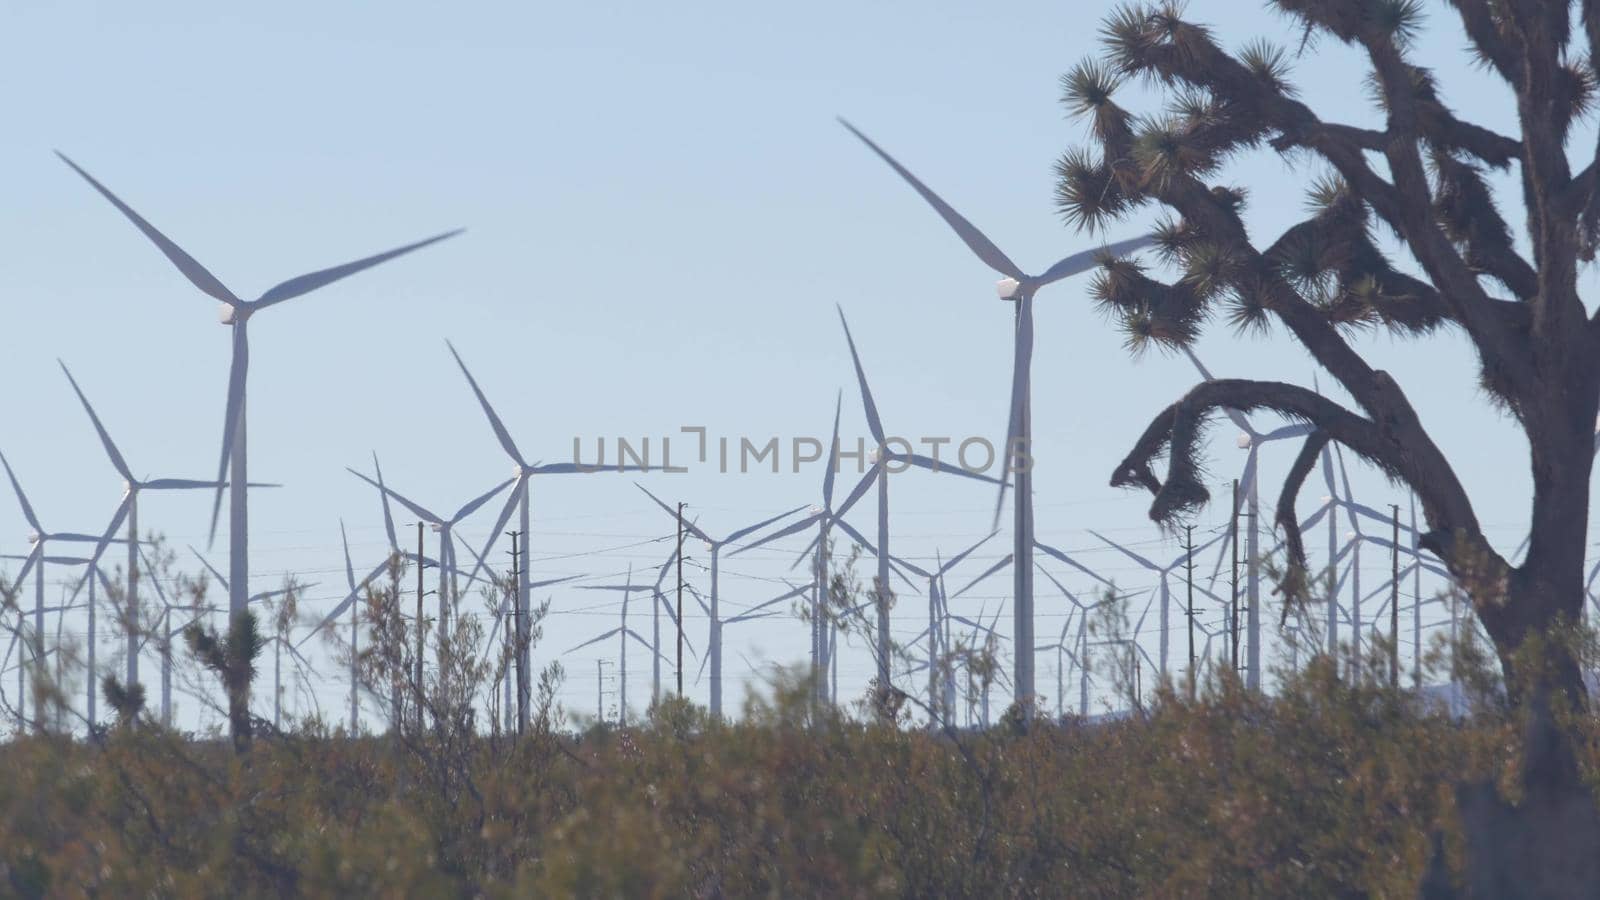 Windmills turbine rotating, wind farm or power plant, green renewable energy generators, industrial field in California, Mojave desert, USA. Electricity generation on windfarm. Yucca joshua tree.